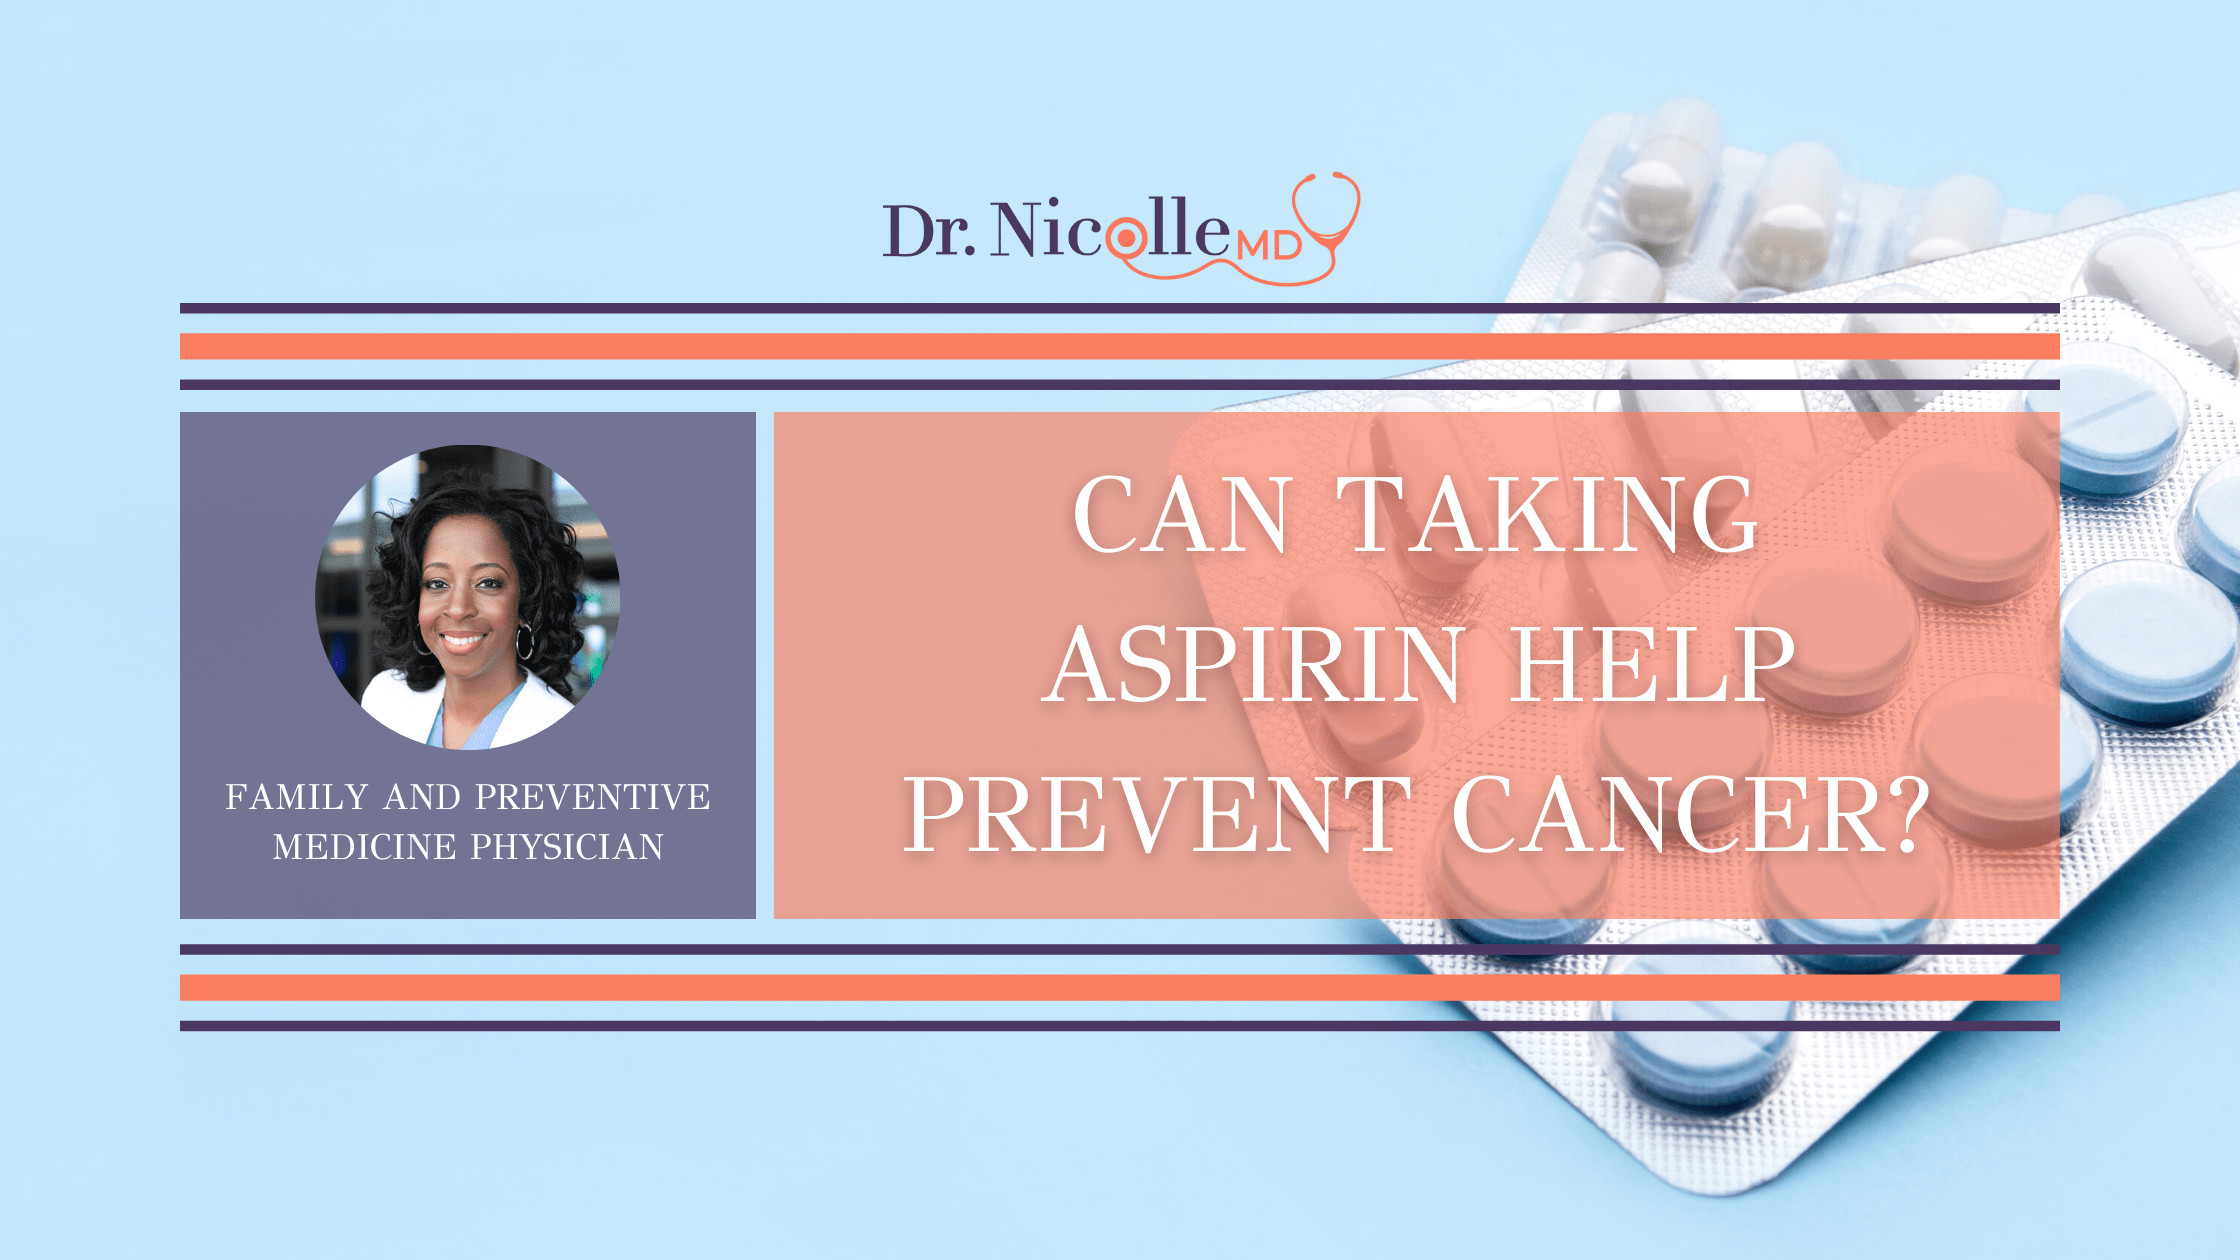 11Can Taking Aspirin Help Prevent Cancer